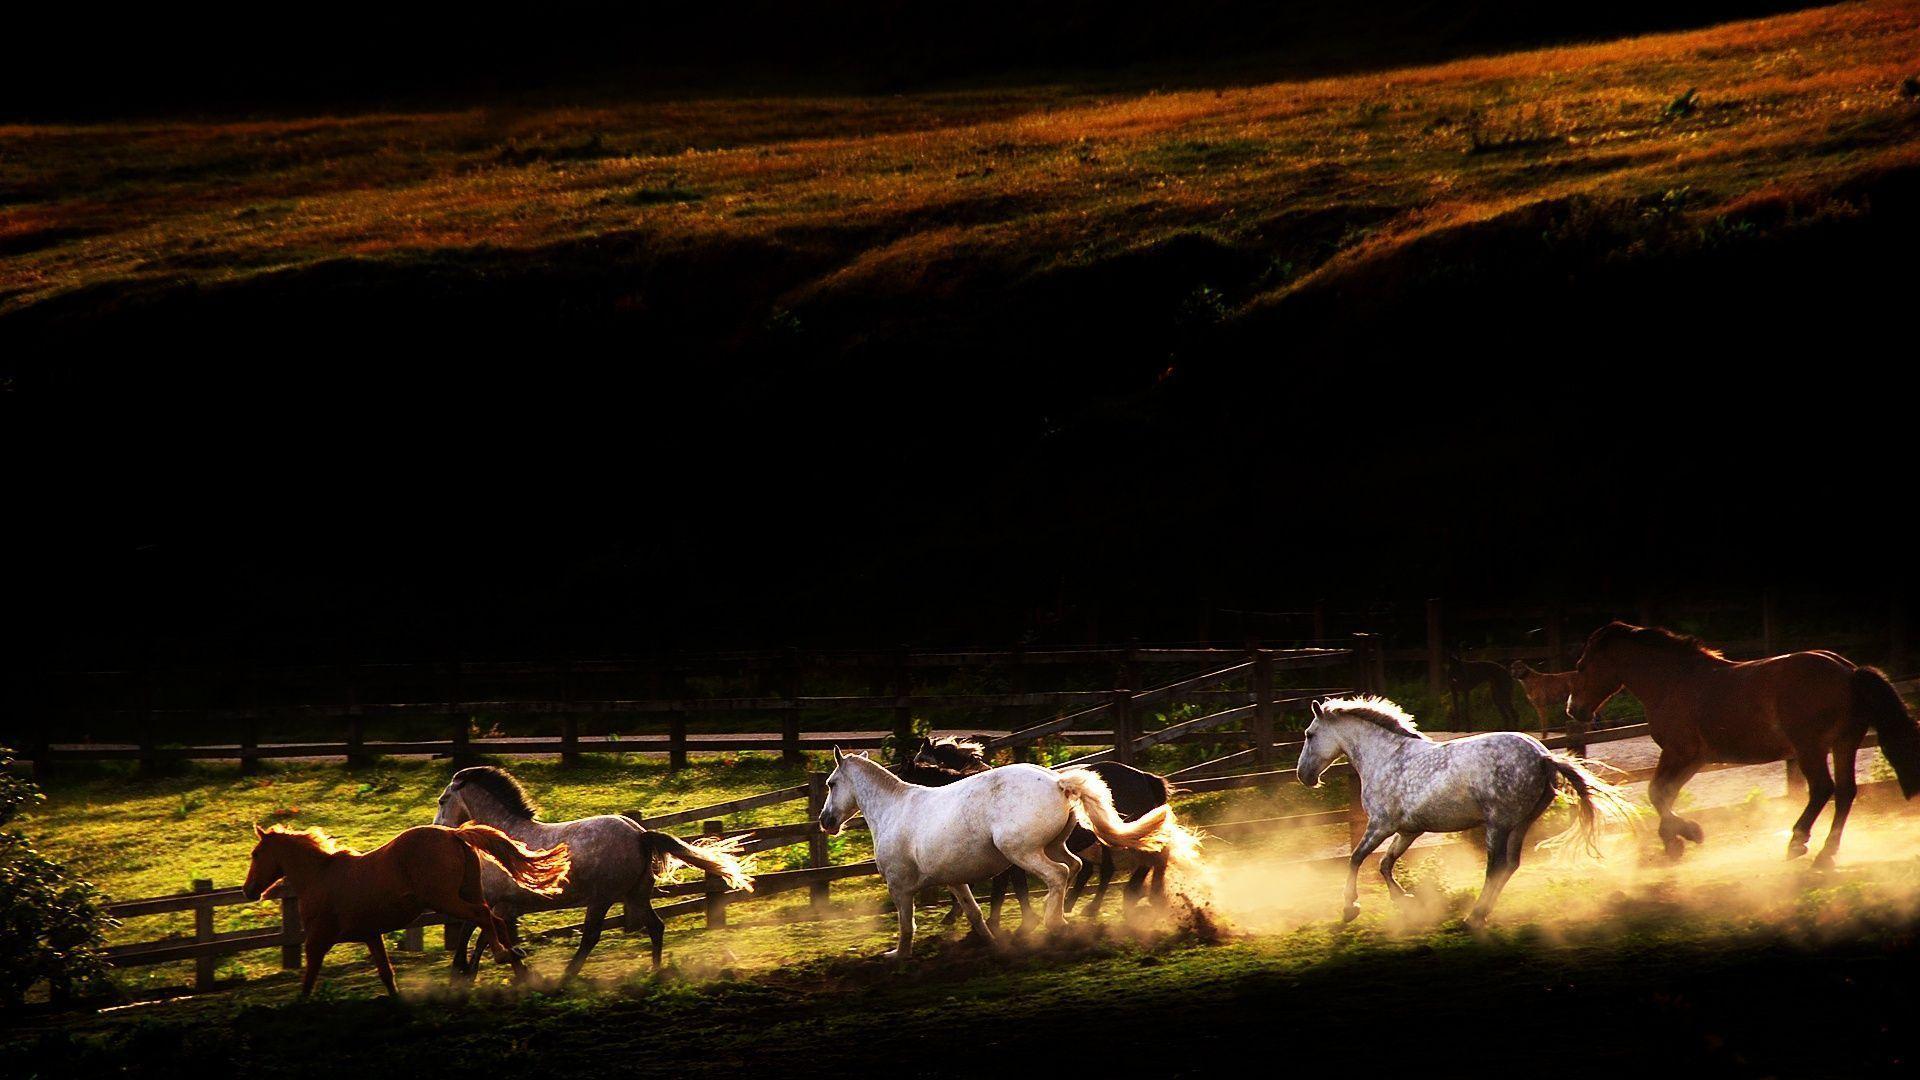 Download Runing Horse HD Desktop Image Wallpaper 1920x1080. Hot